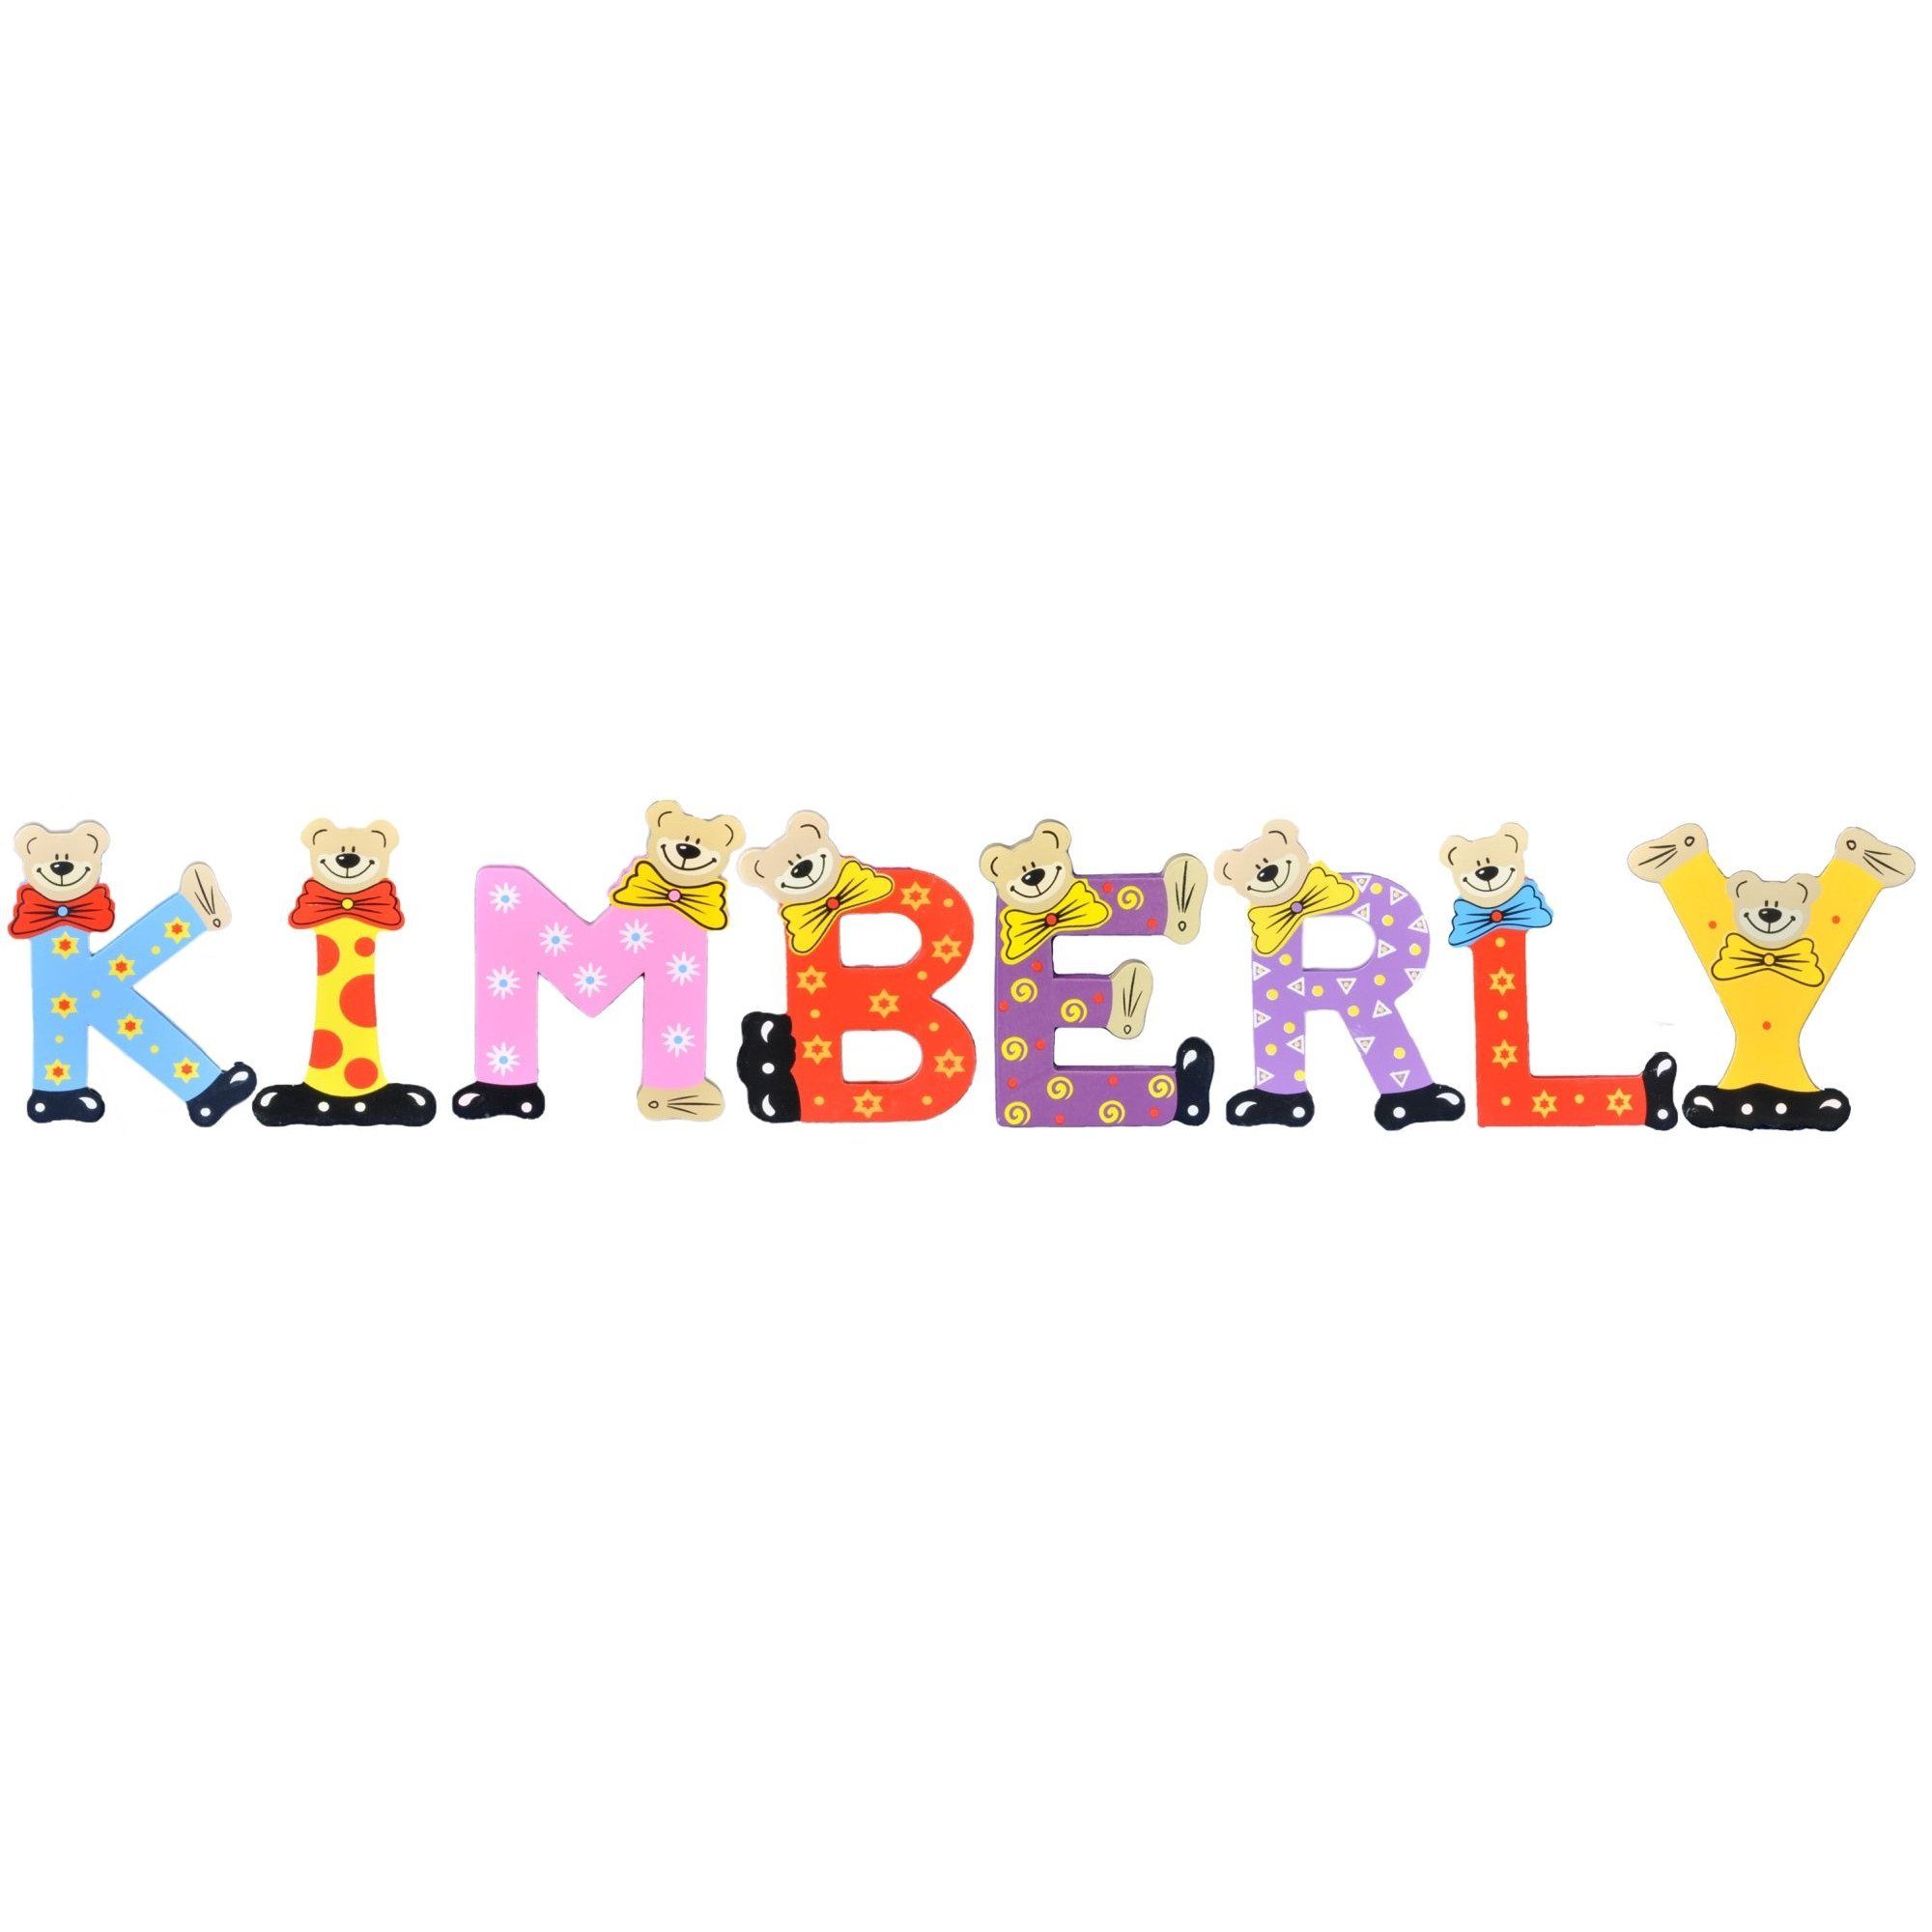 Kinder KIMBERLY - Deko-Buchstaben Playshoes Namen-Set, St), (Set, 8 Holz-Buchstaben sortiert